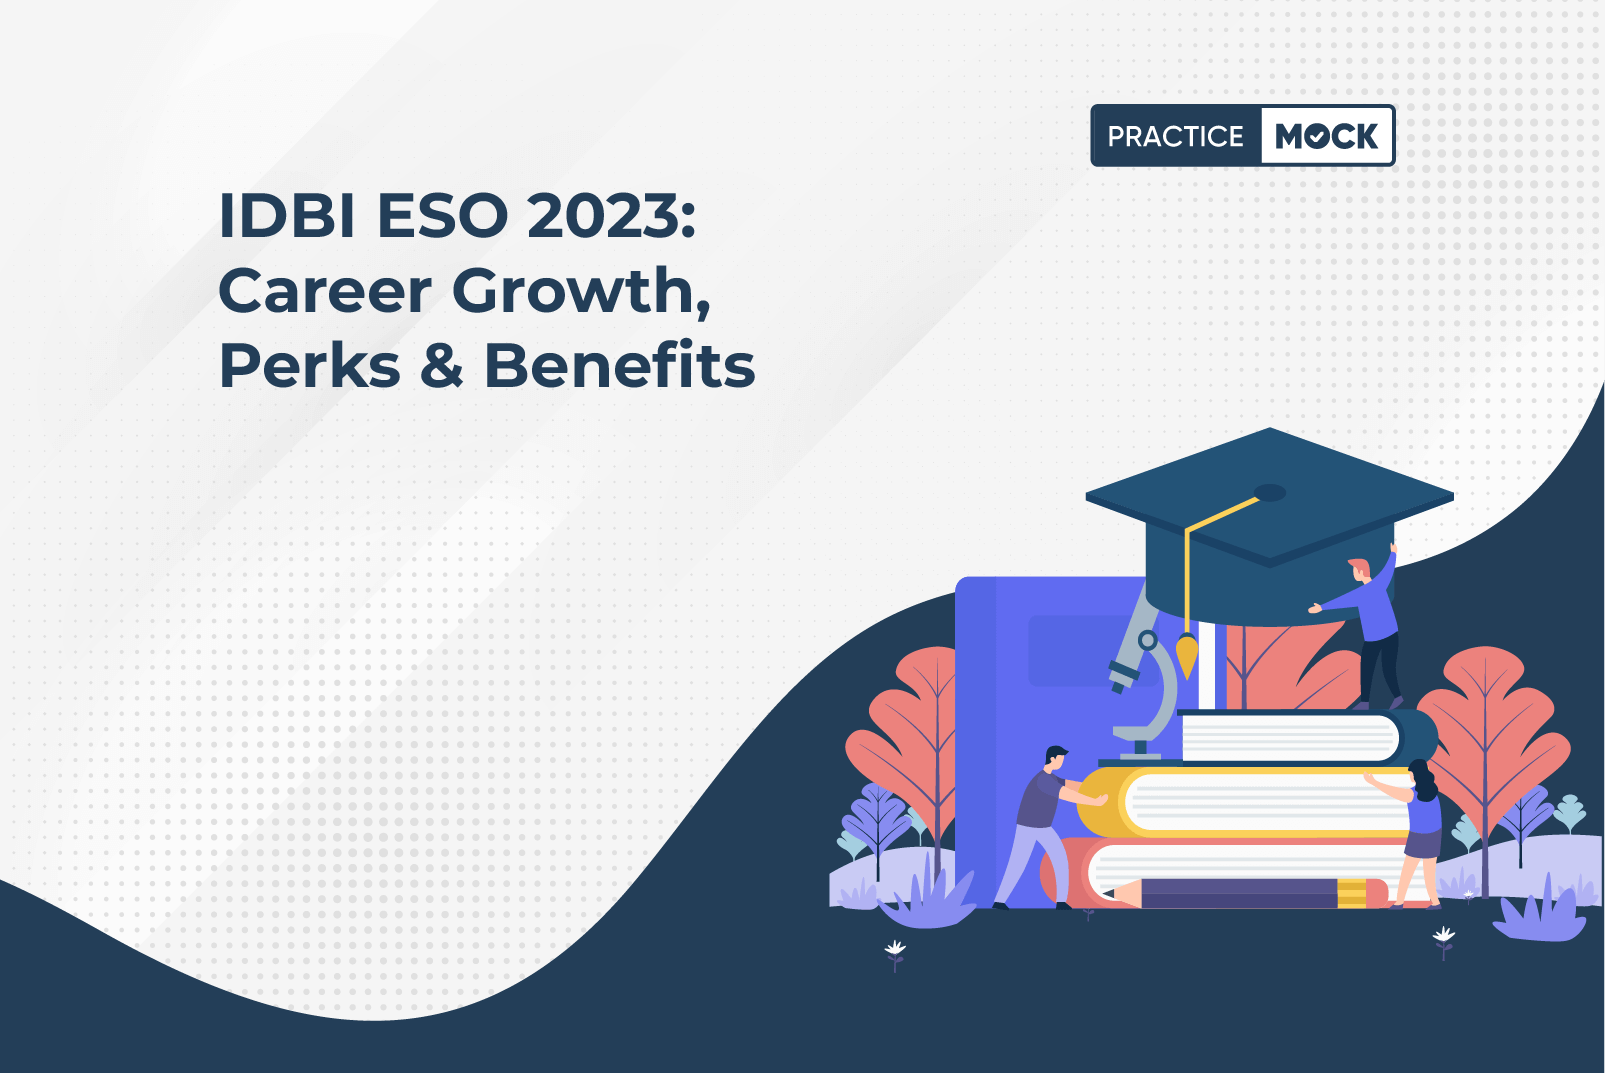 IDBI ESO 2023: Career Growth, Perks & Benefits